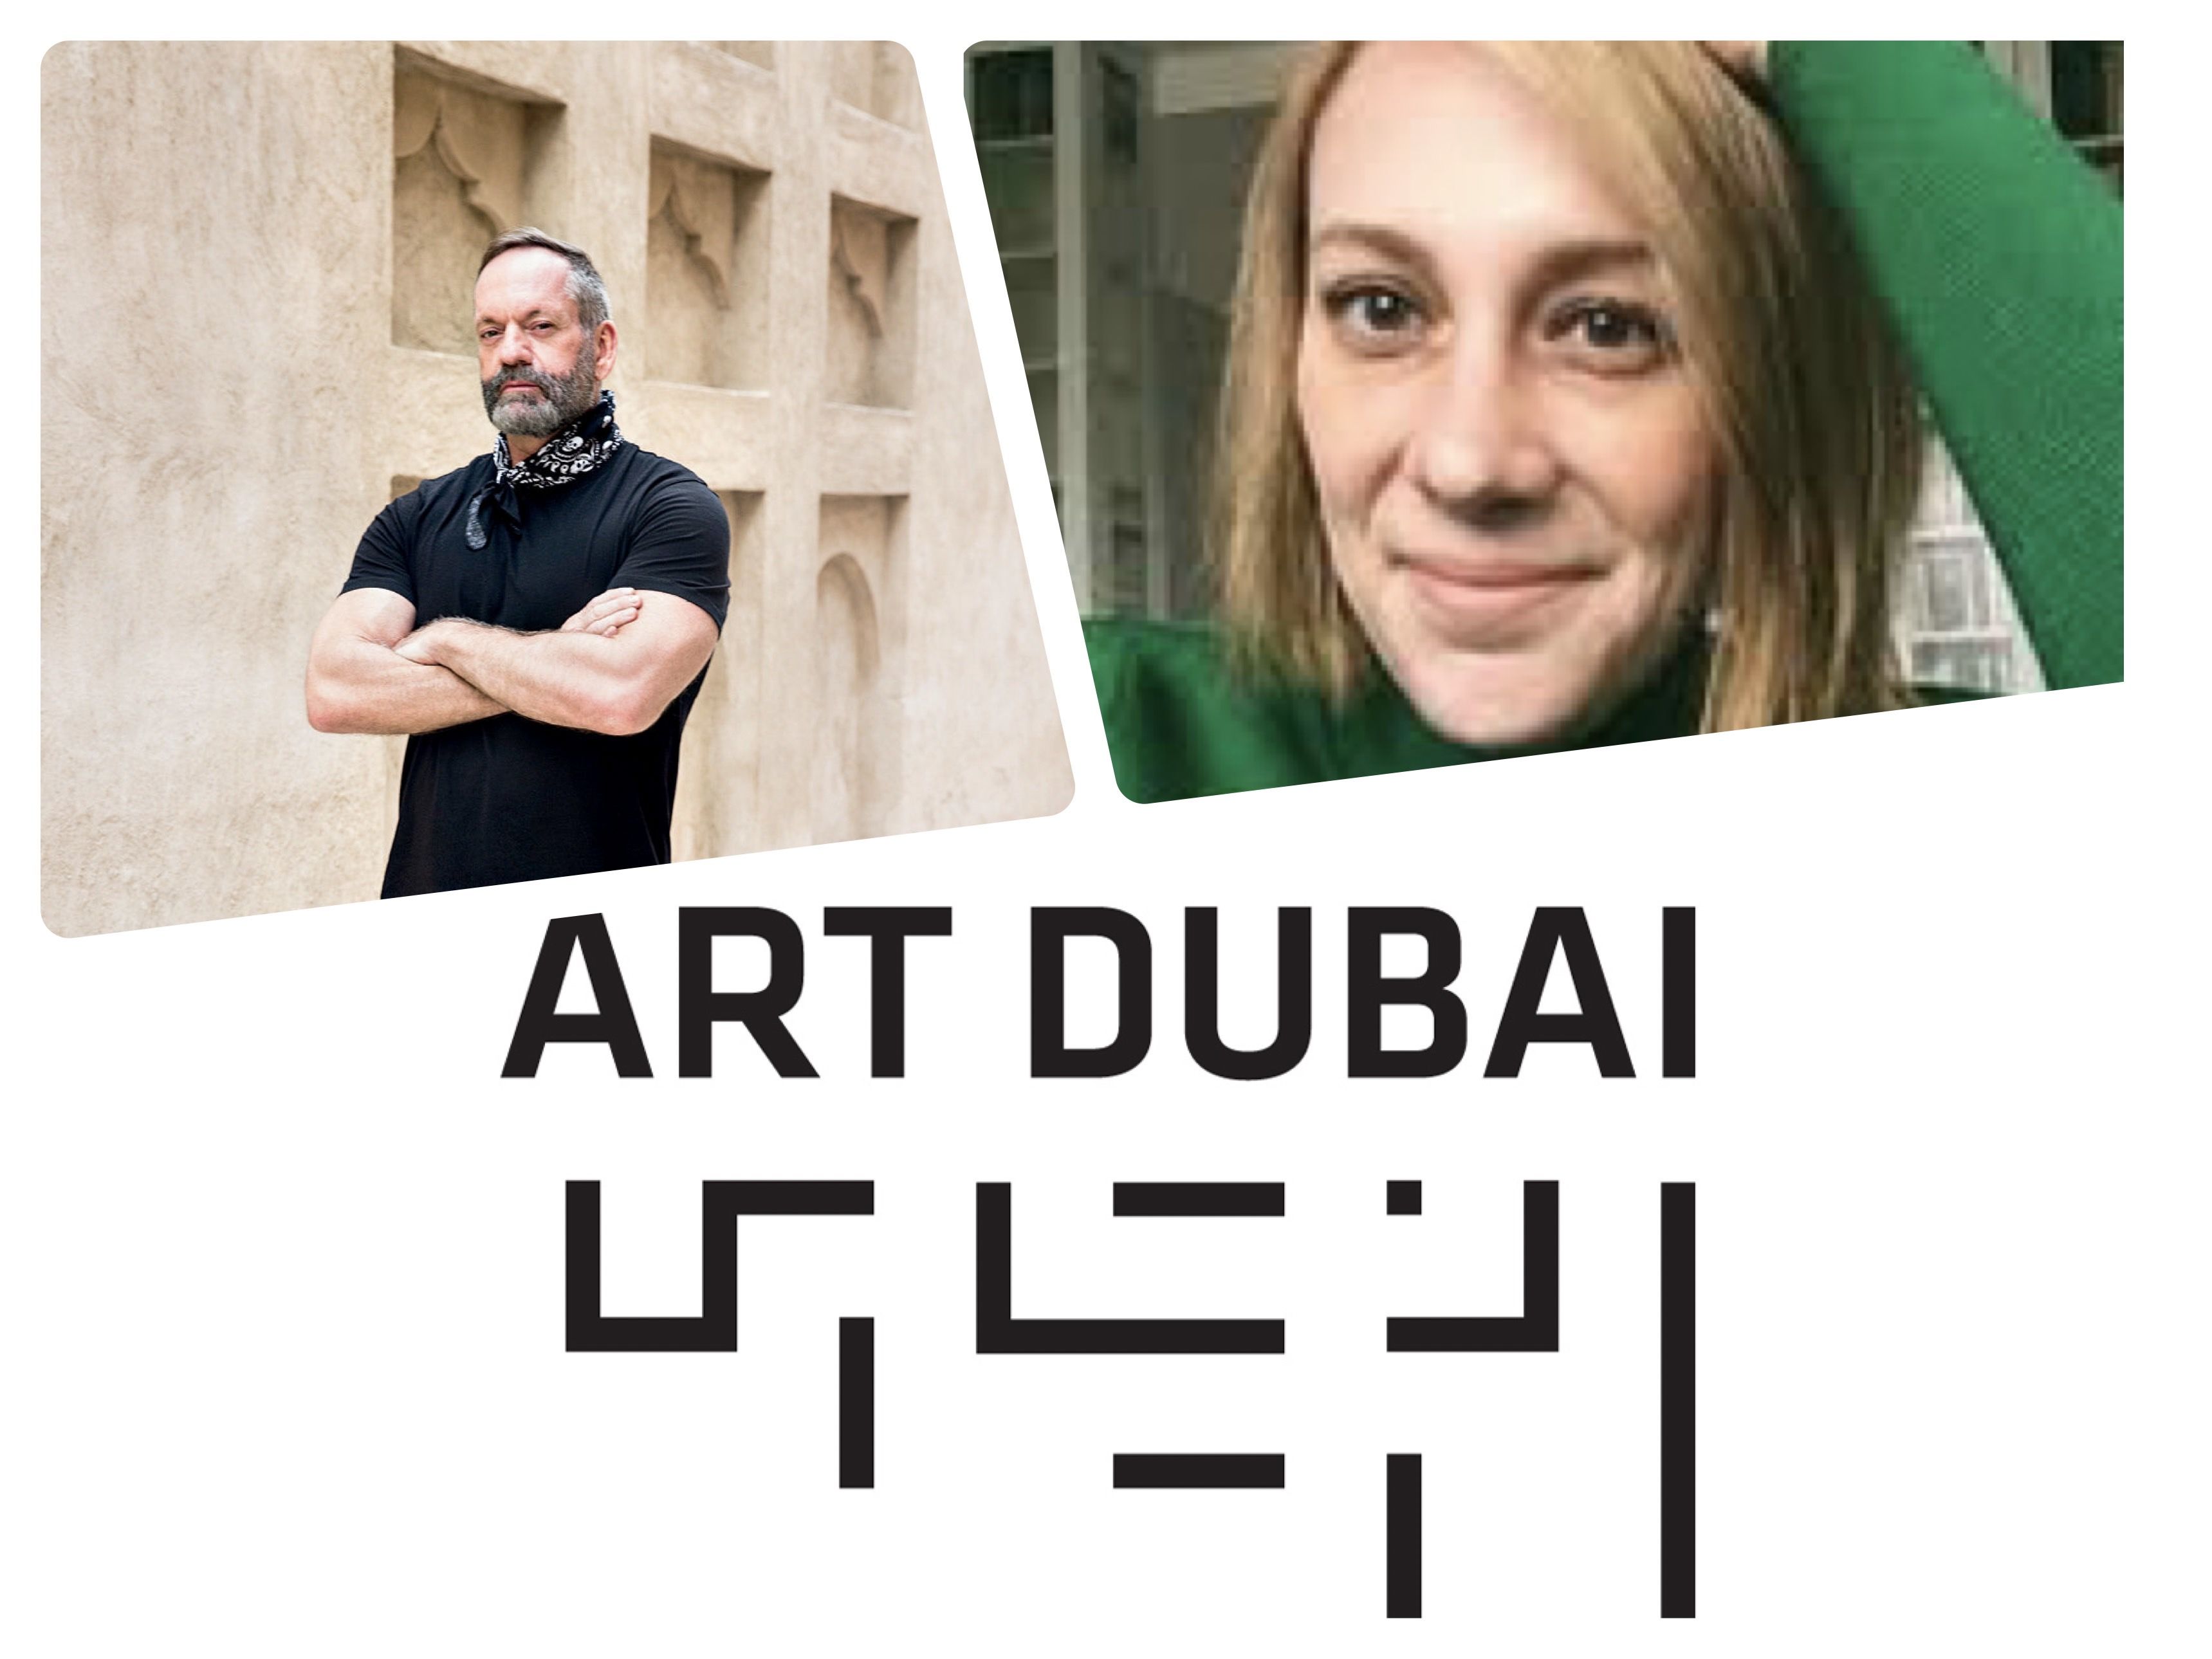 Christianna Bonin Elected The Art Dubai Modern Art Director/ ArtDubai2024 will Come With Four Gallery Sections
